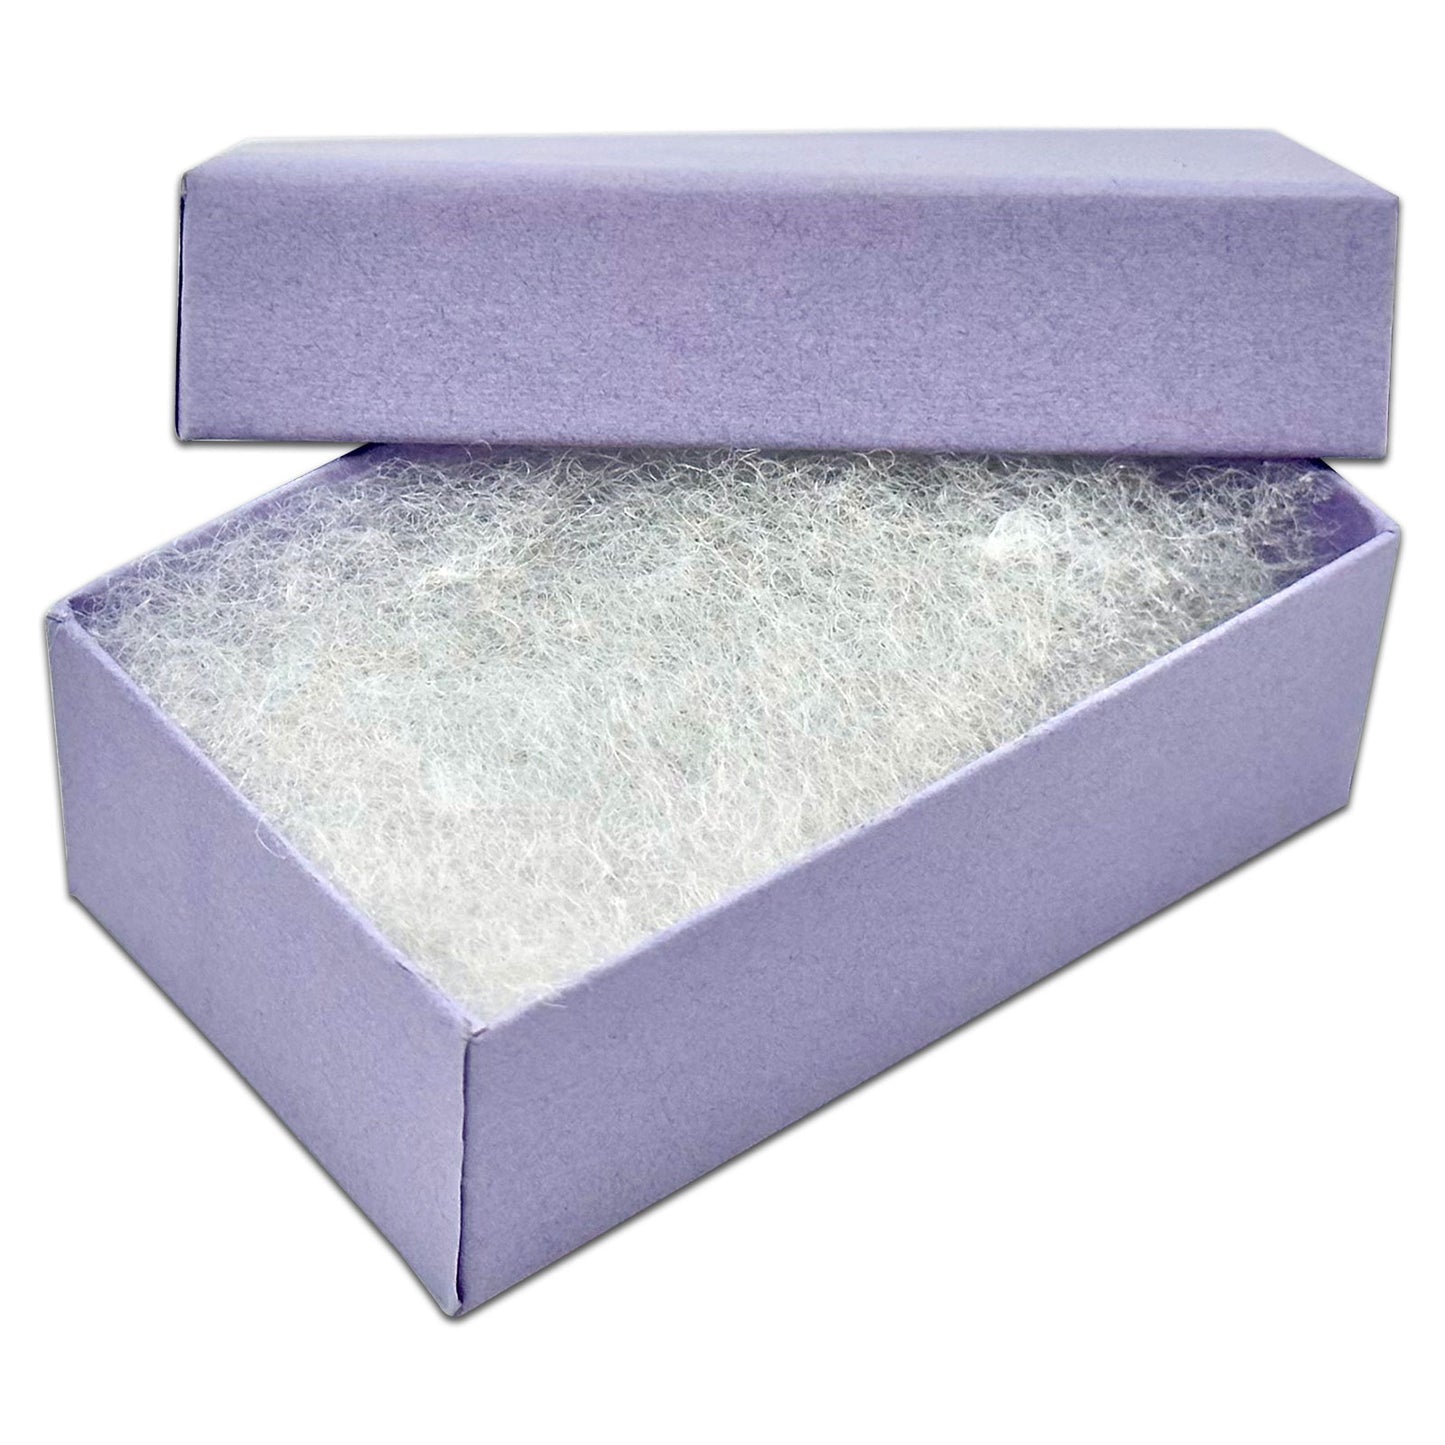 2 5/8" x 1 5/8" x 1" Light Lavender Cotton Filled Paper Box